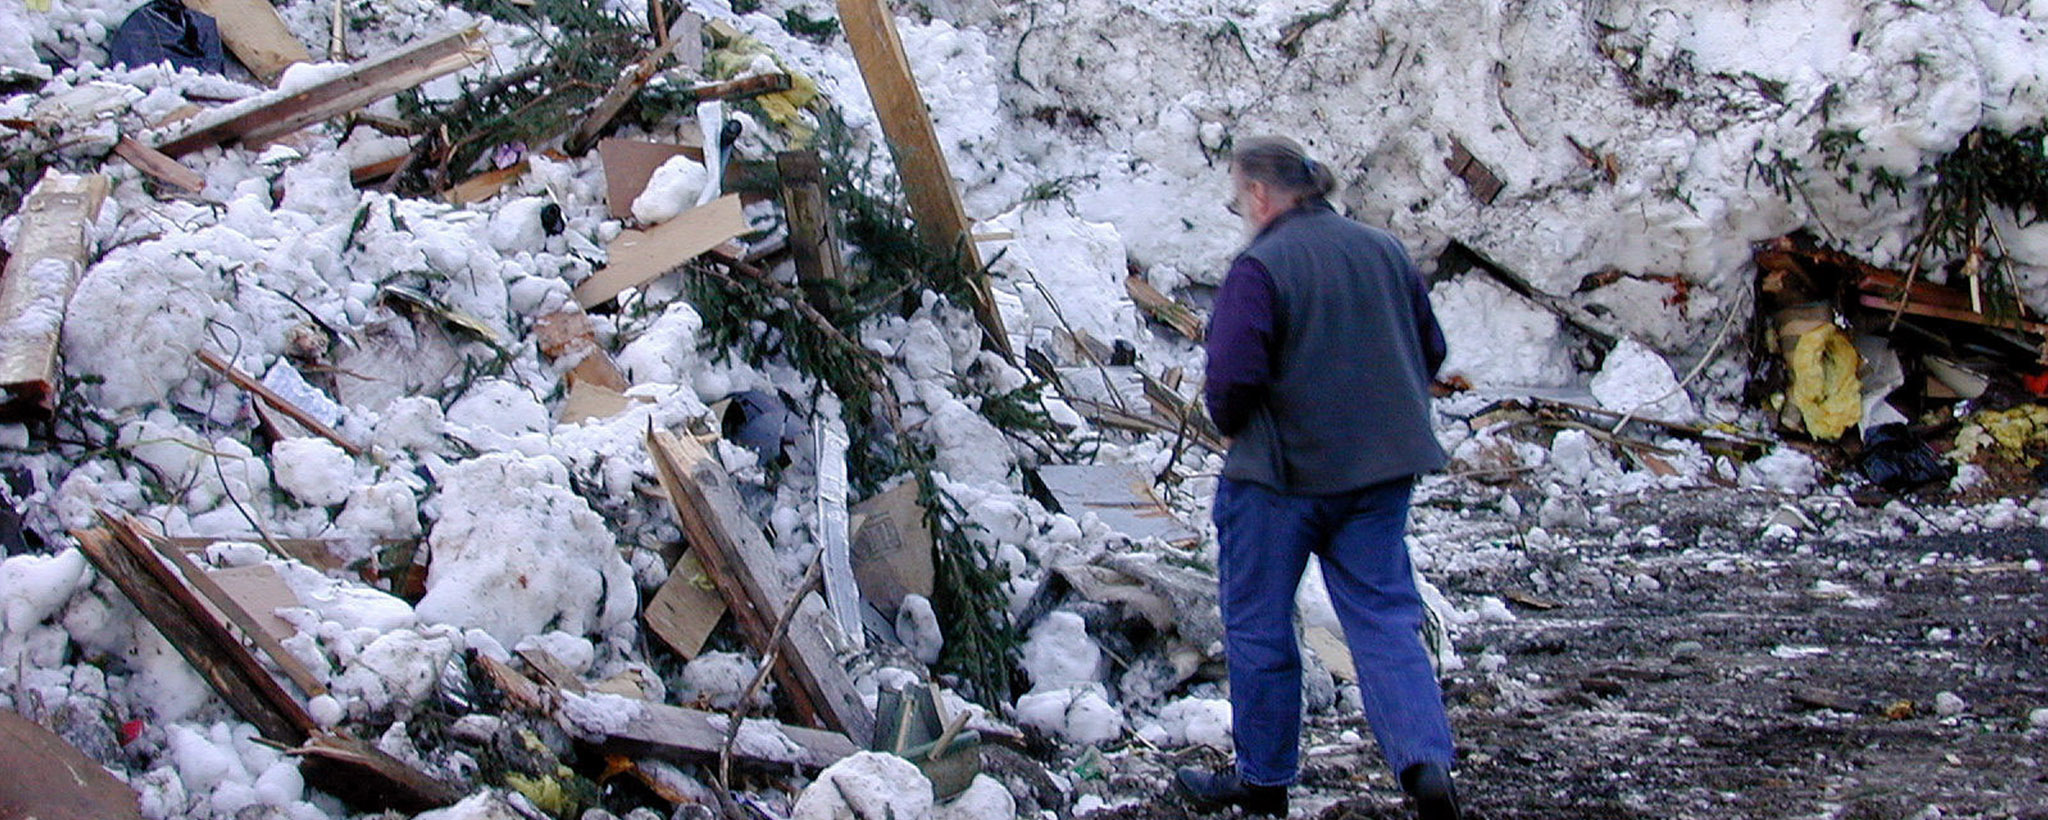 Un hombre examina el daño después de una avalancha